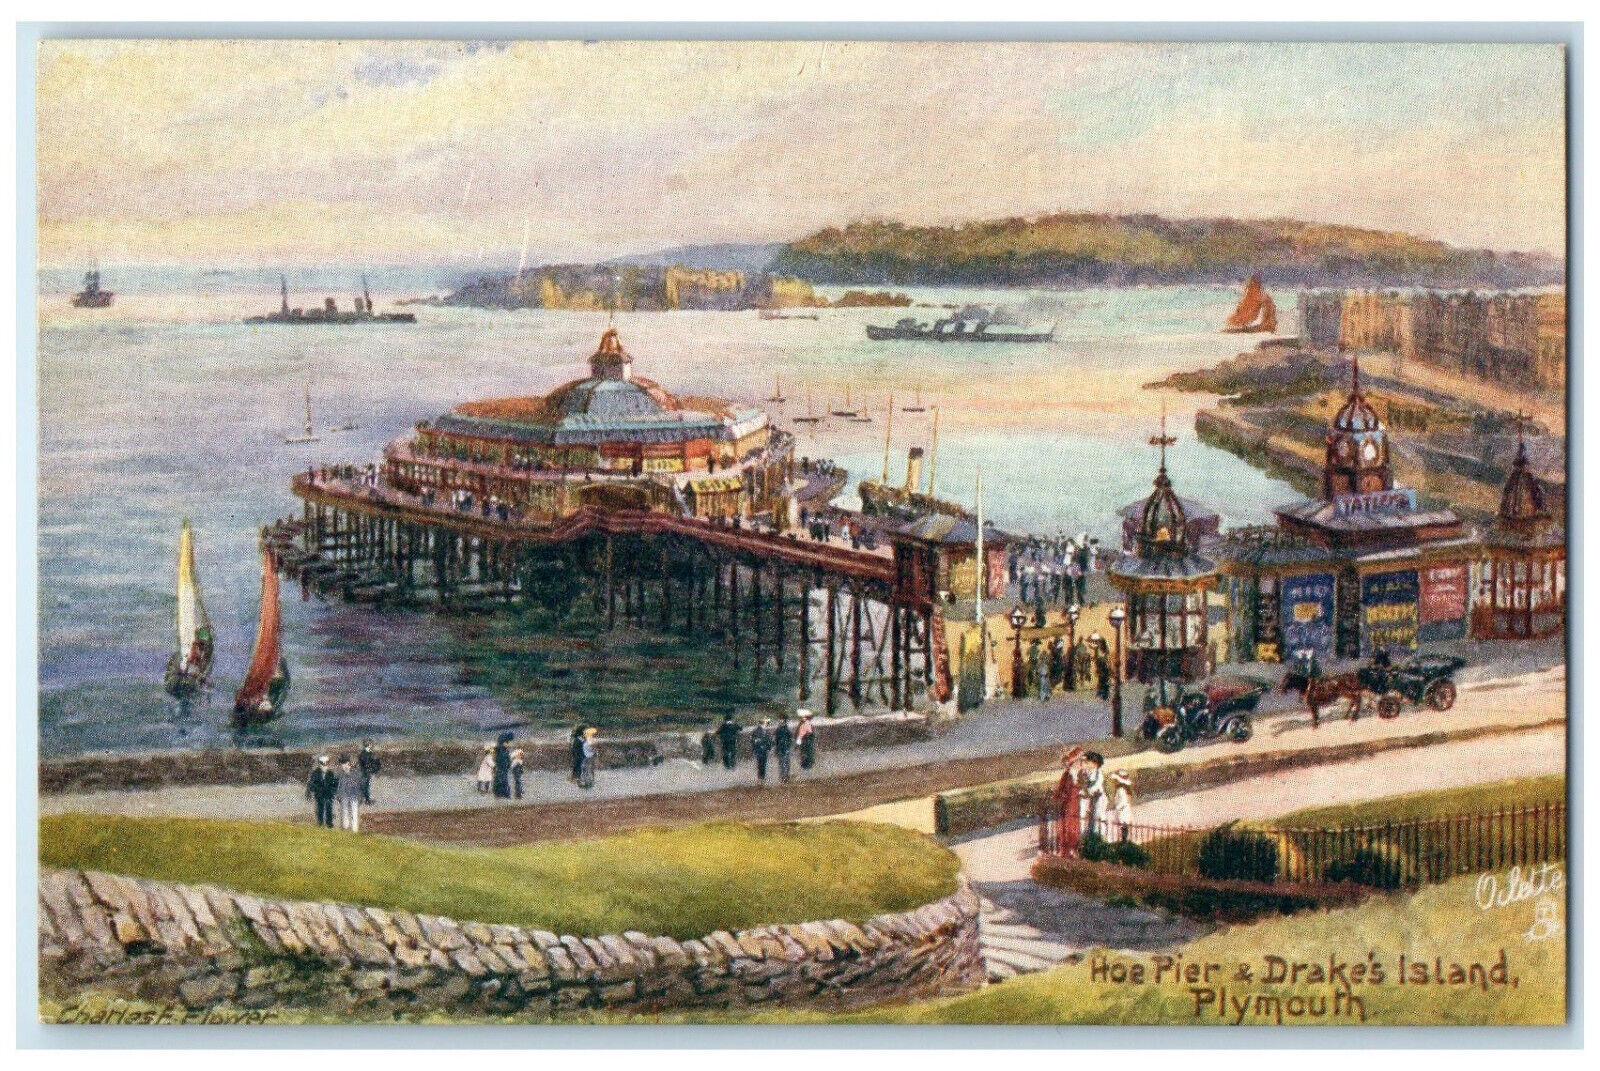 c1910 Hoe Pier & Drake's Island Plymouth England Oilette Tuck Art Postcard